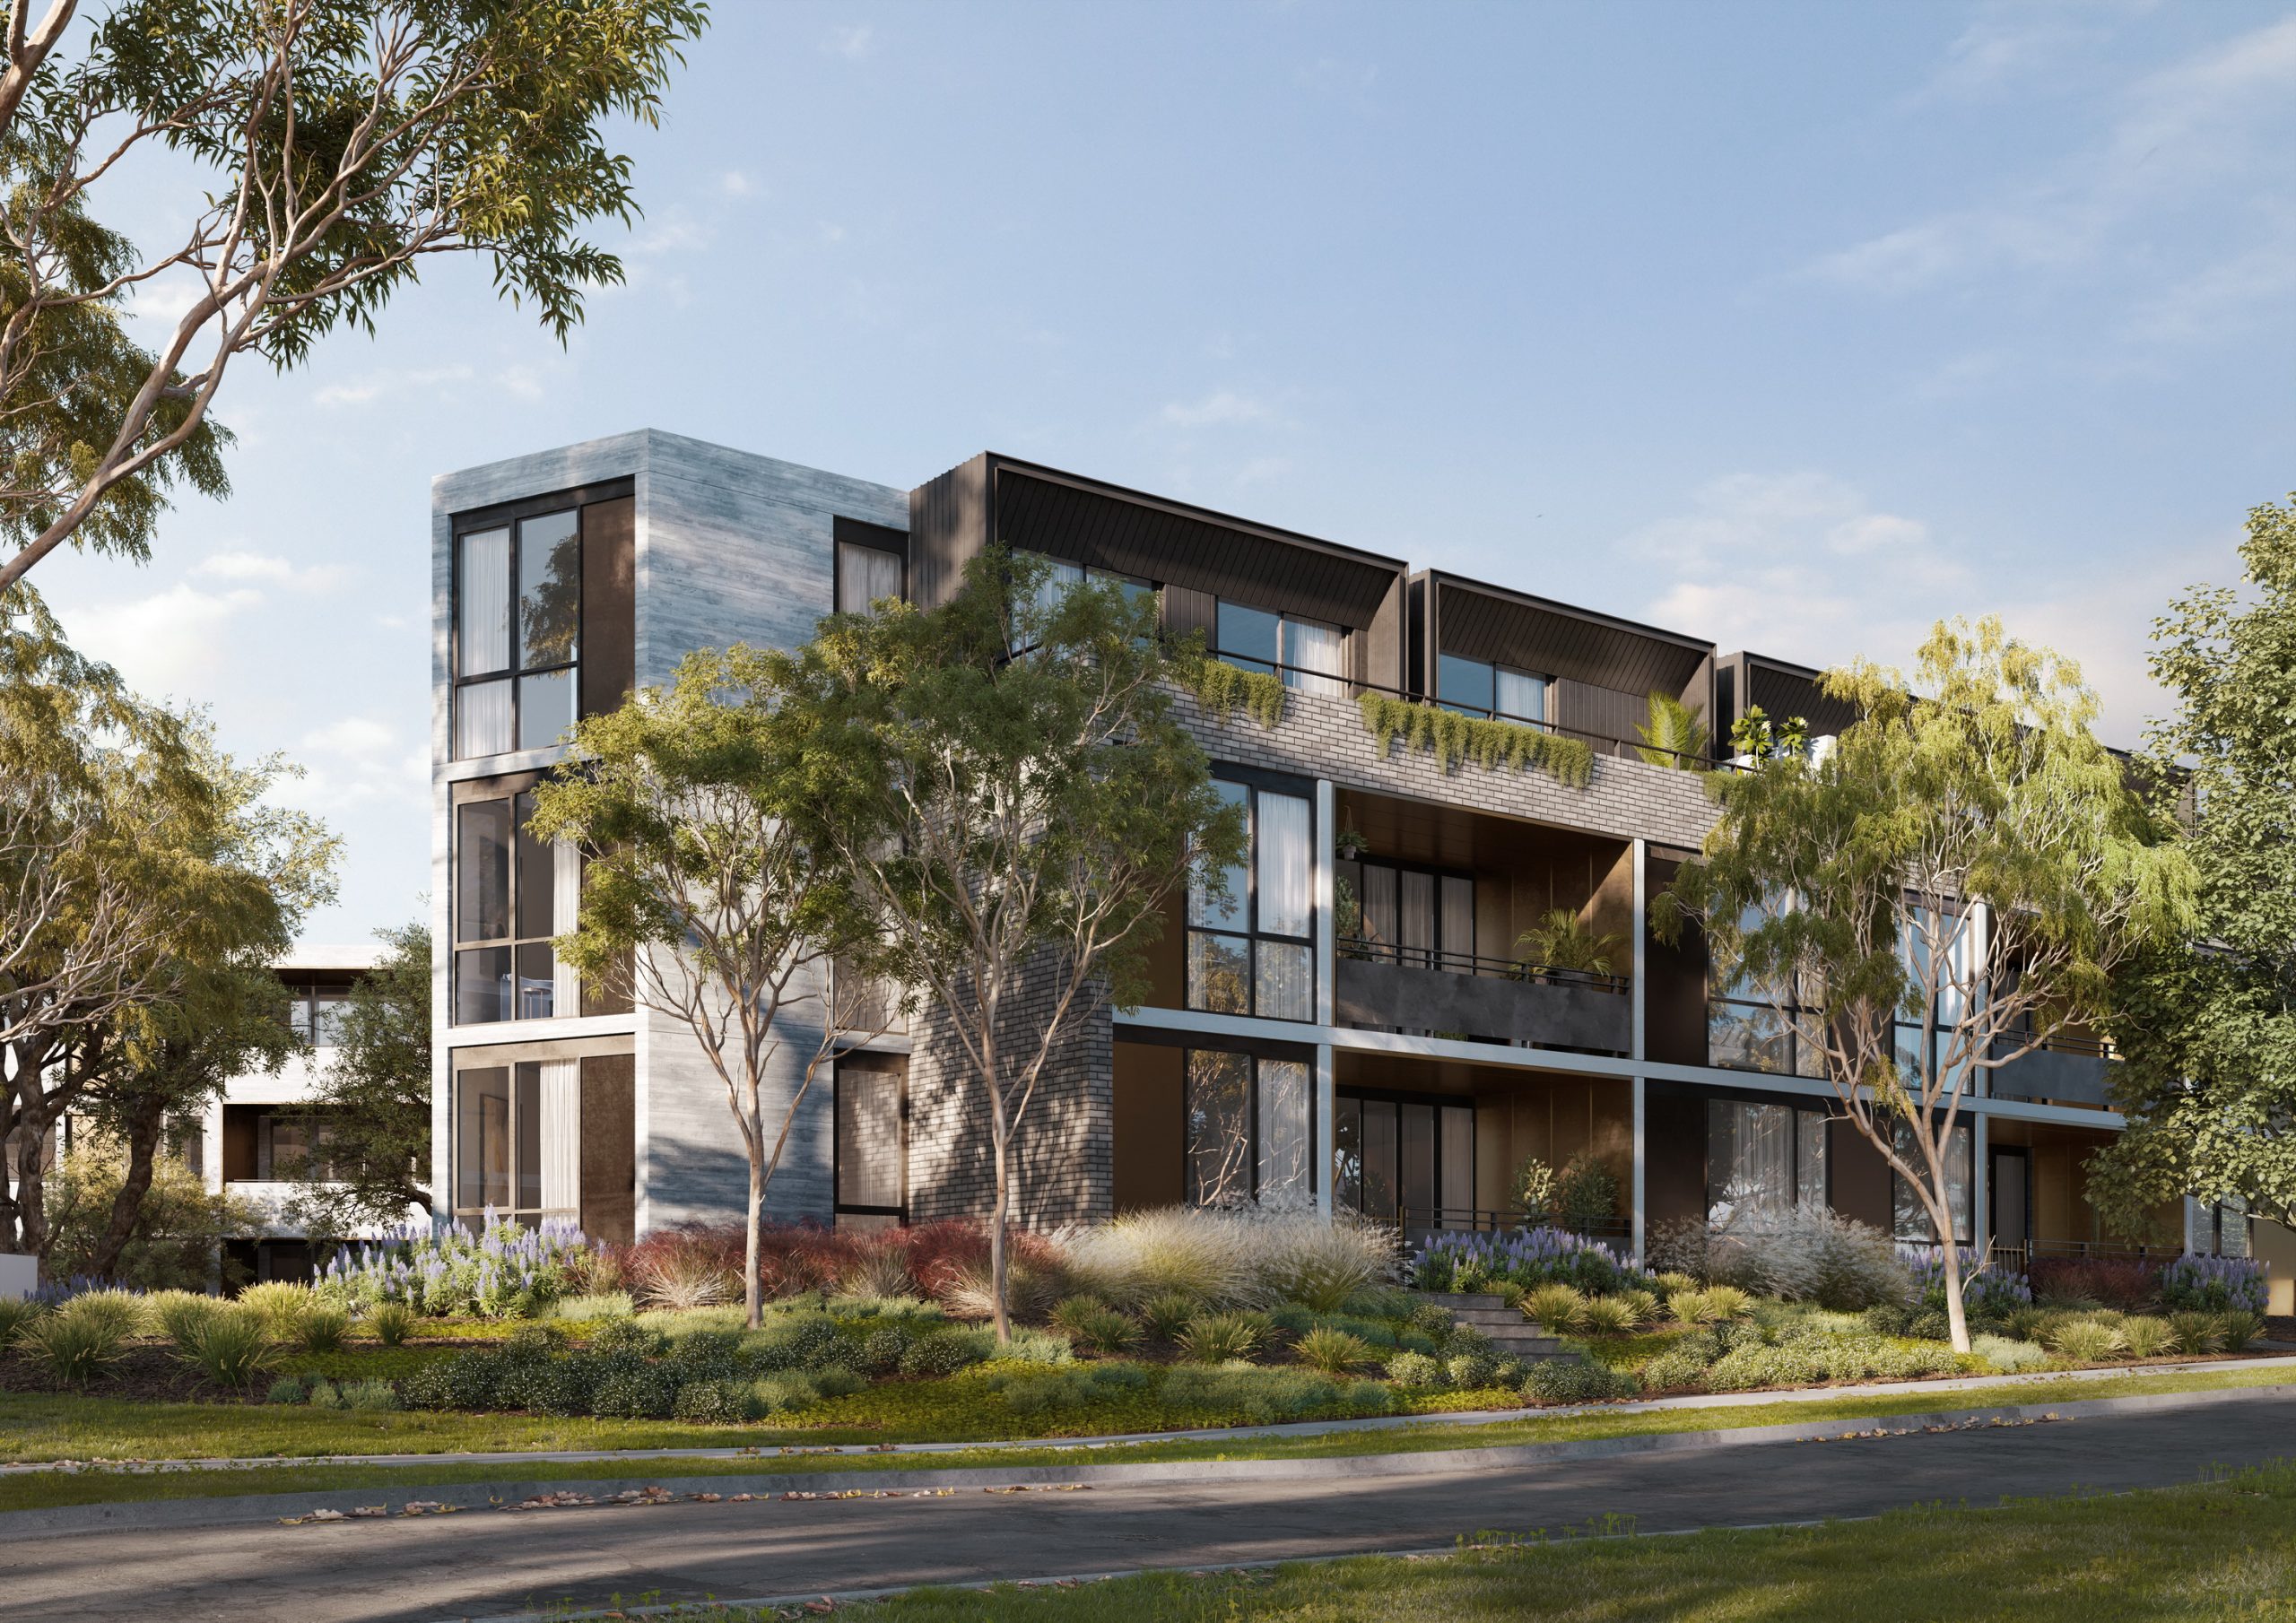 fkd-studio-render-architecture-image-the-grounds-exterior-ivanhoe-residential-parklands